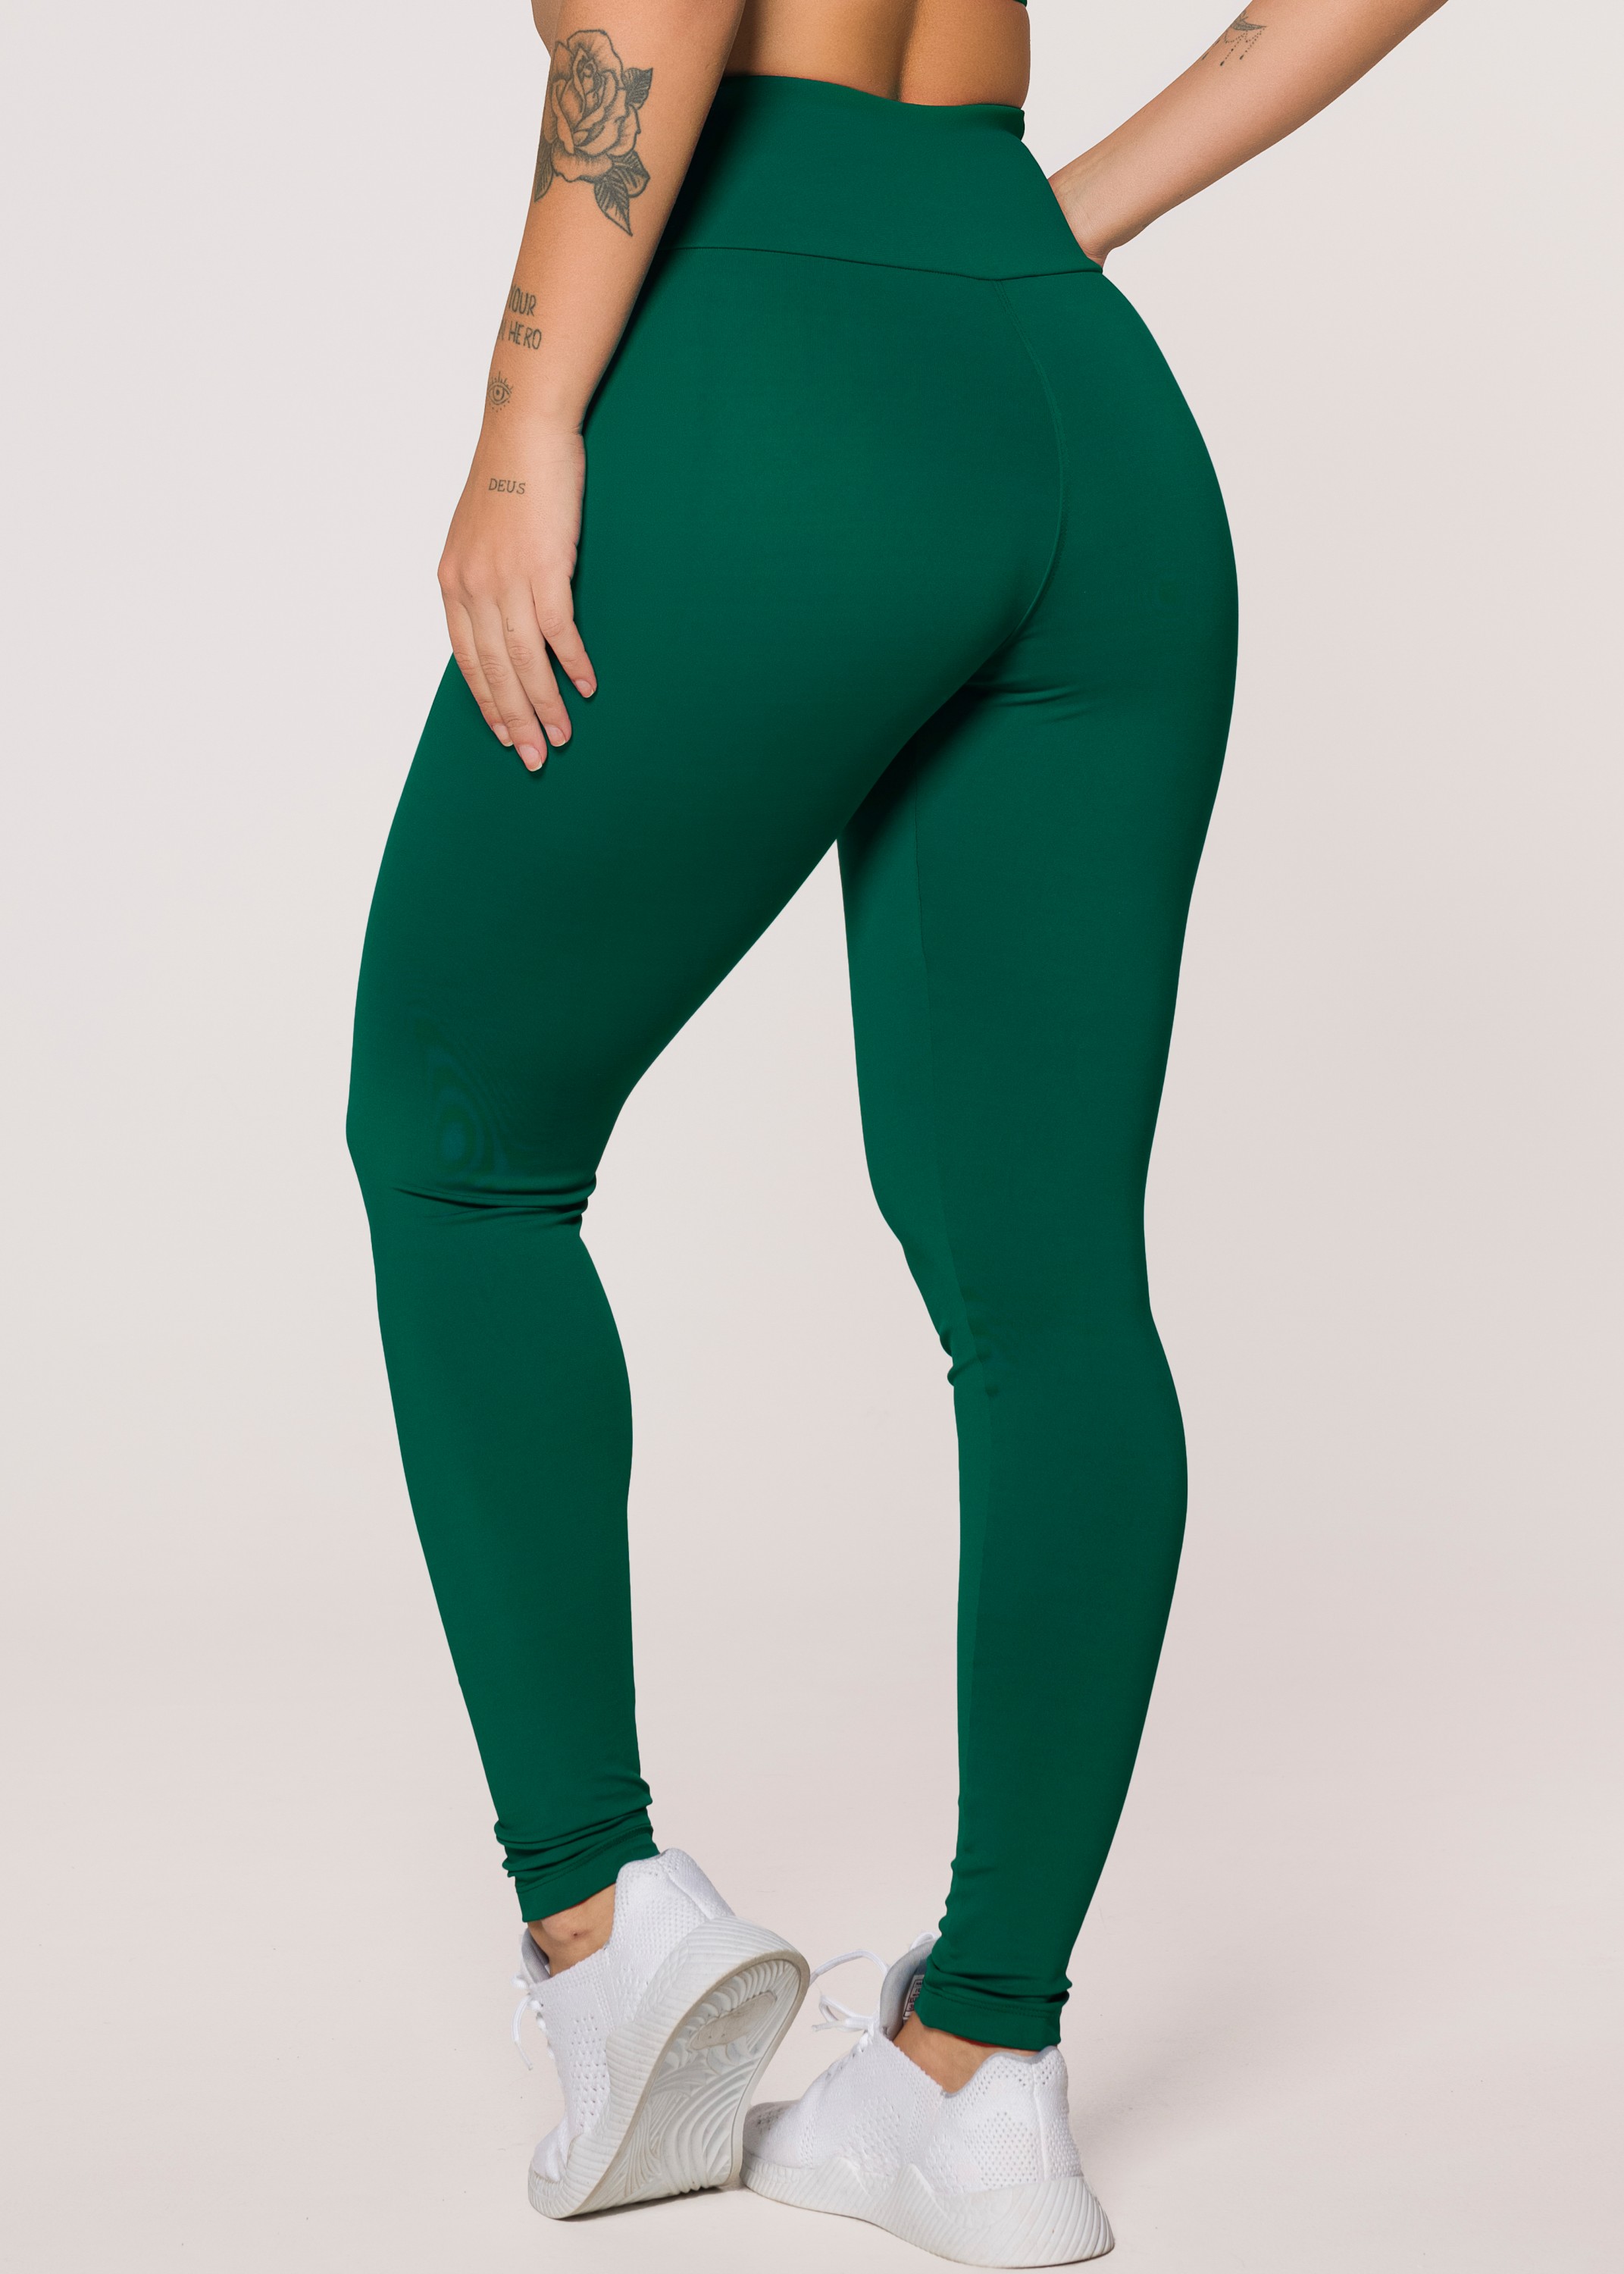 High-Waisted Legging in Emerald – Suav activewear